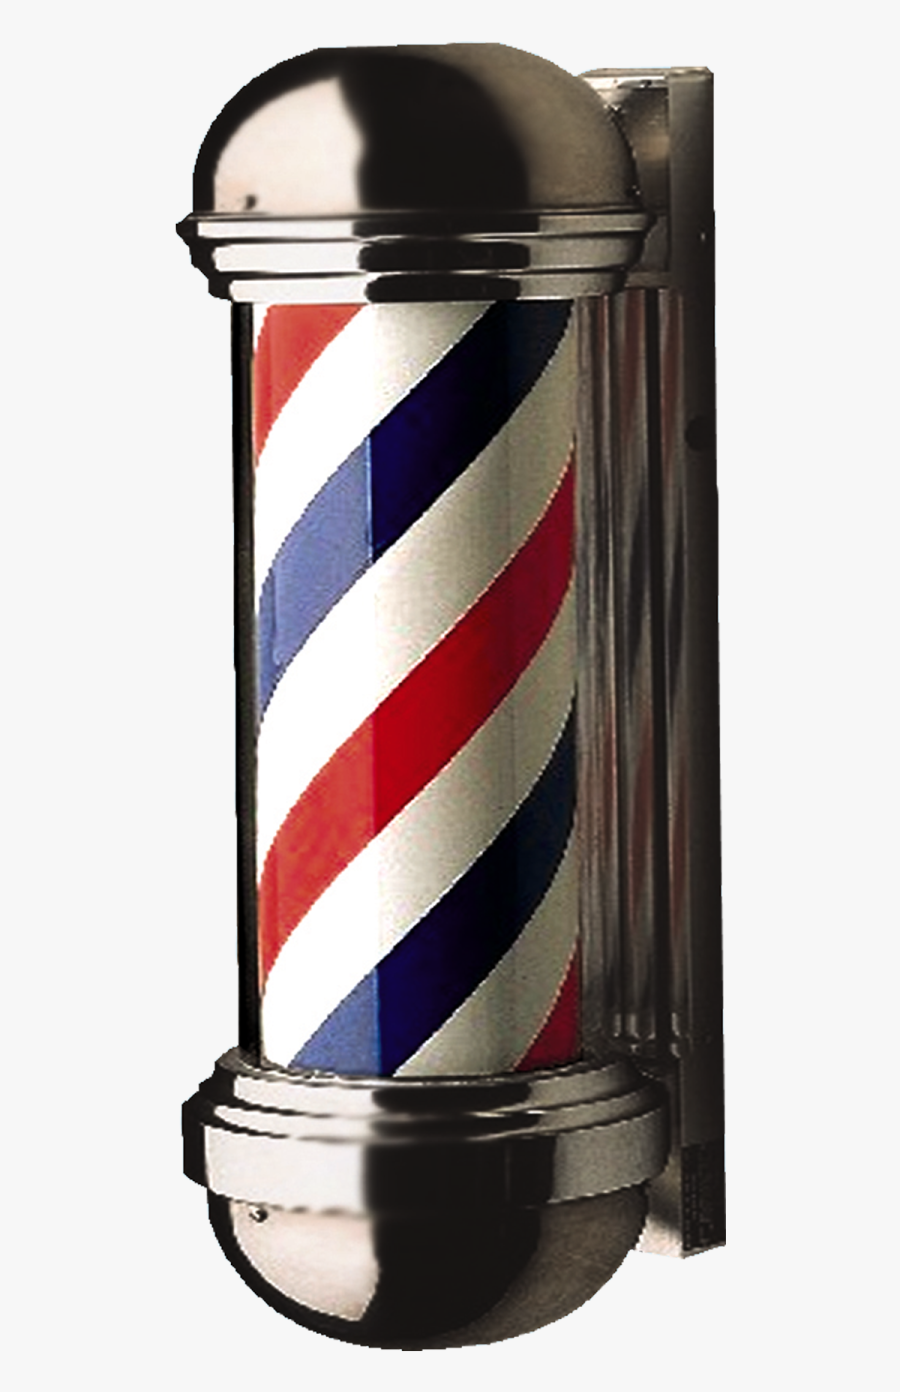 Clip Art Pictures Of Barber Poles - Barber Pole Transparent Background, Transparent Clipart